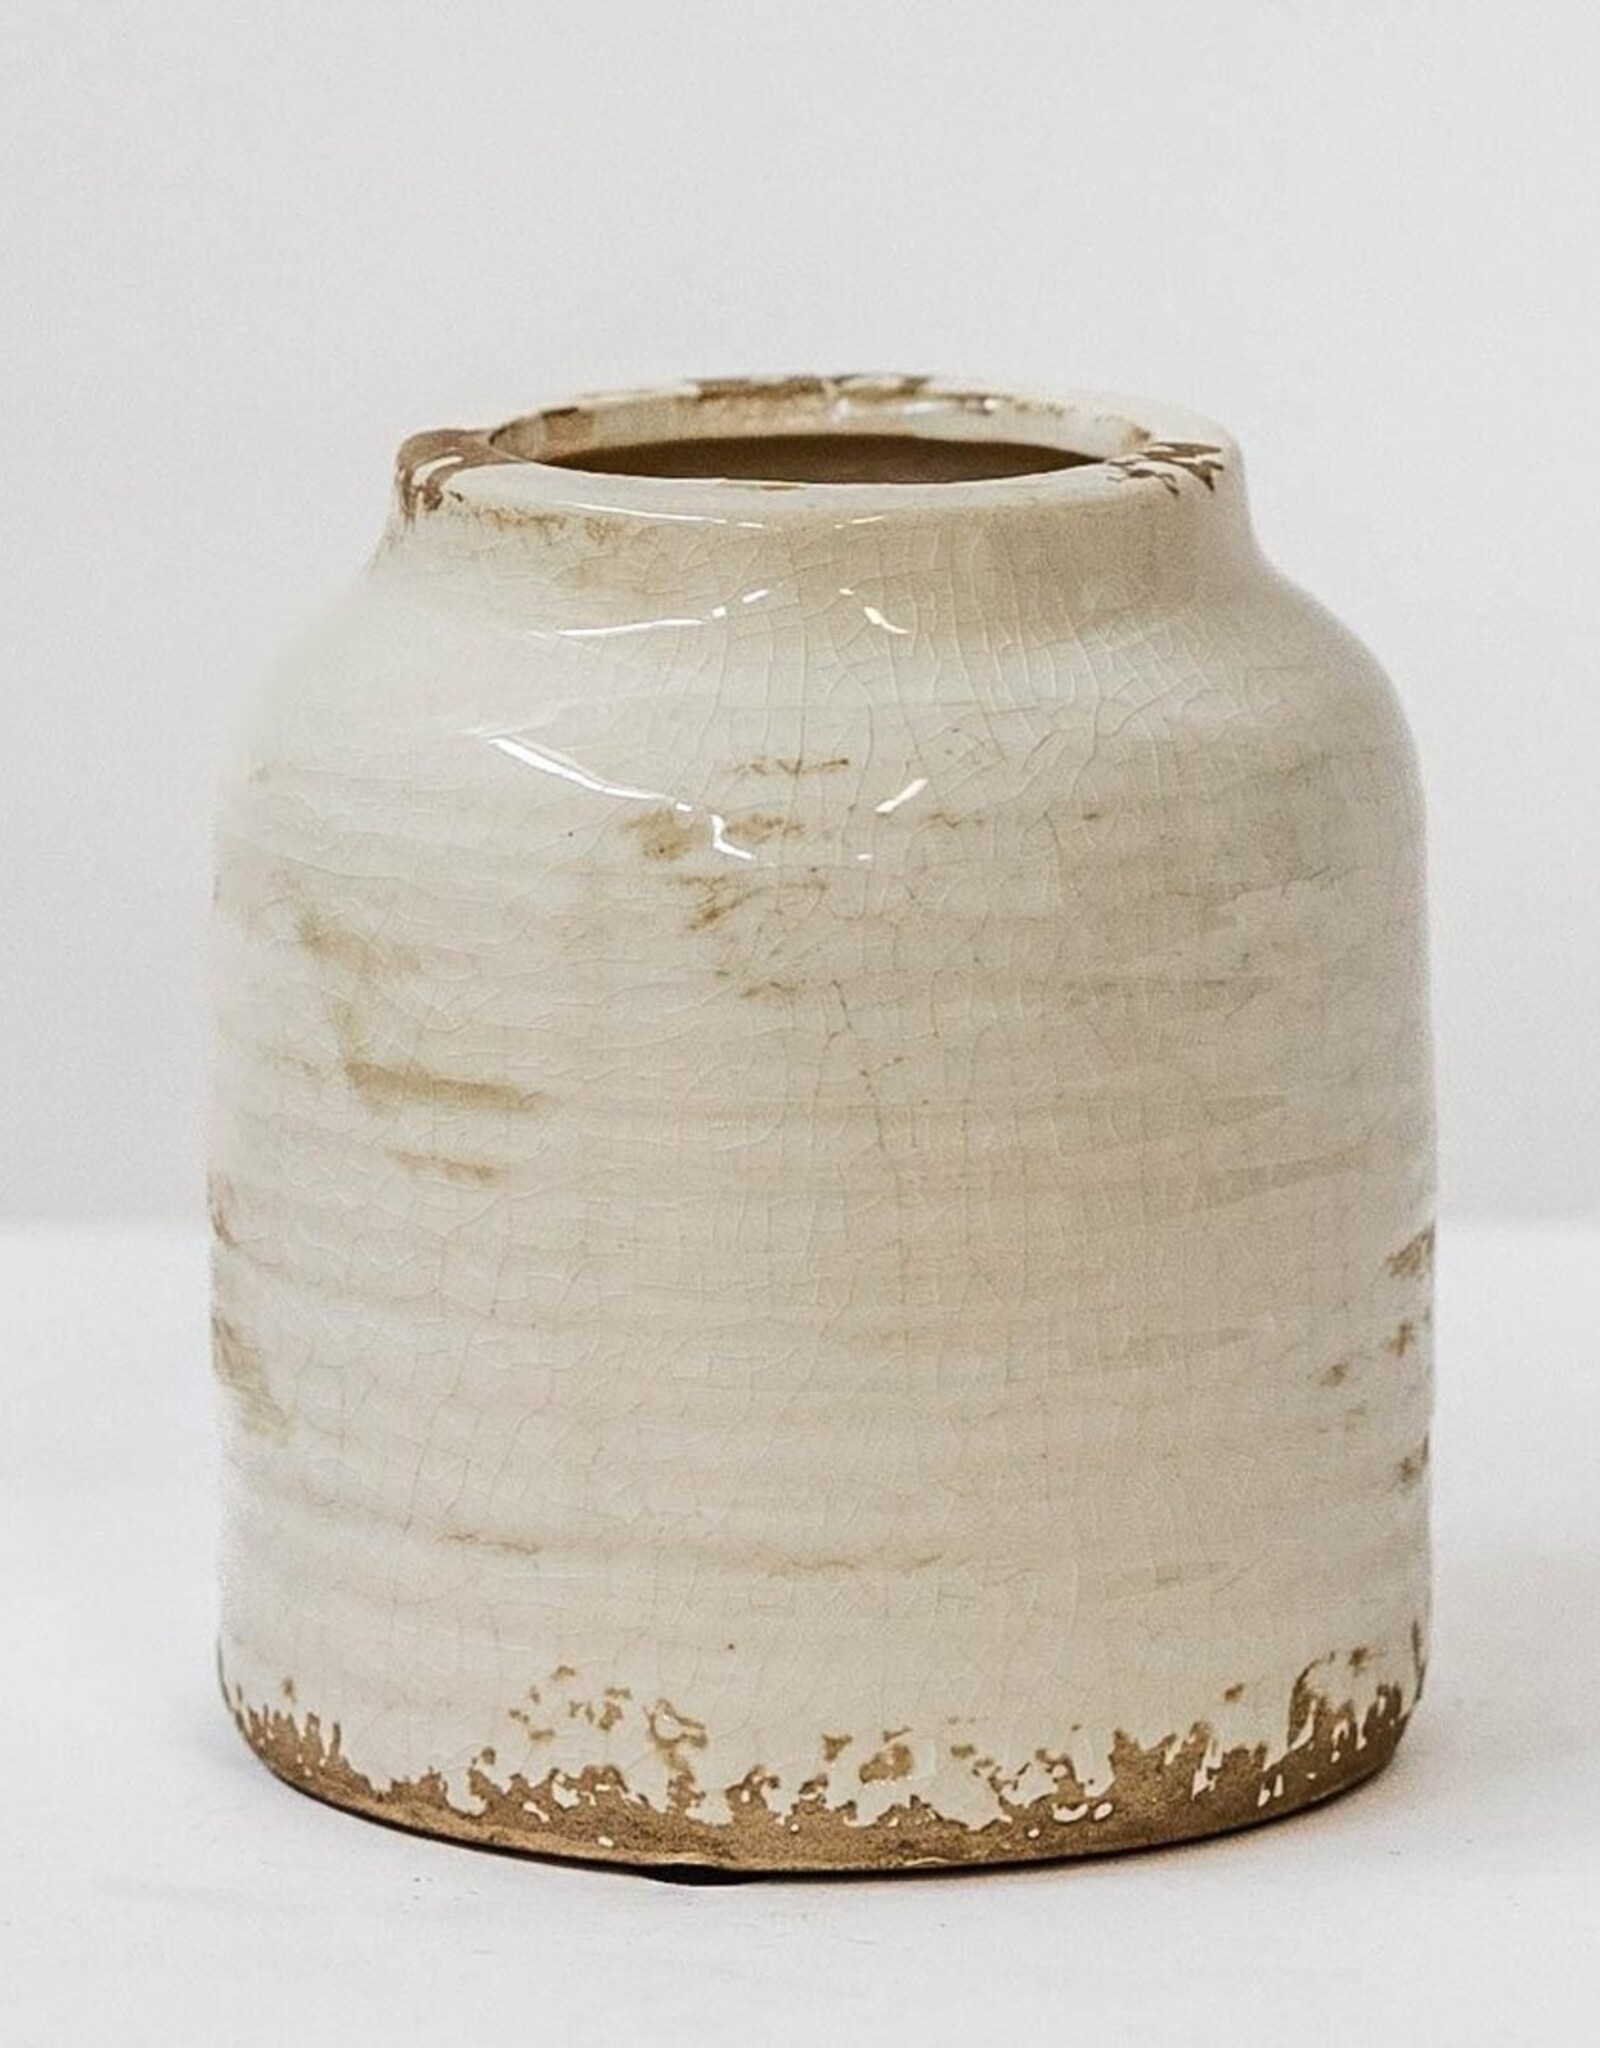 Forpost Trade Ceramic Vase, White & Beige